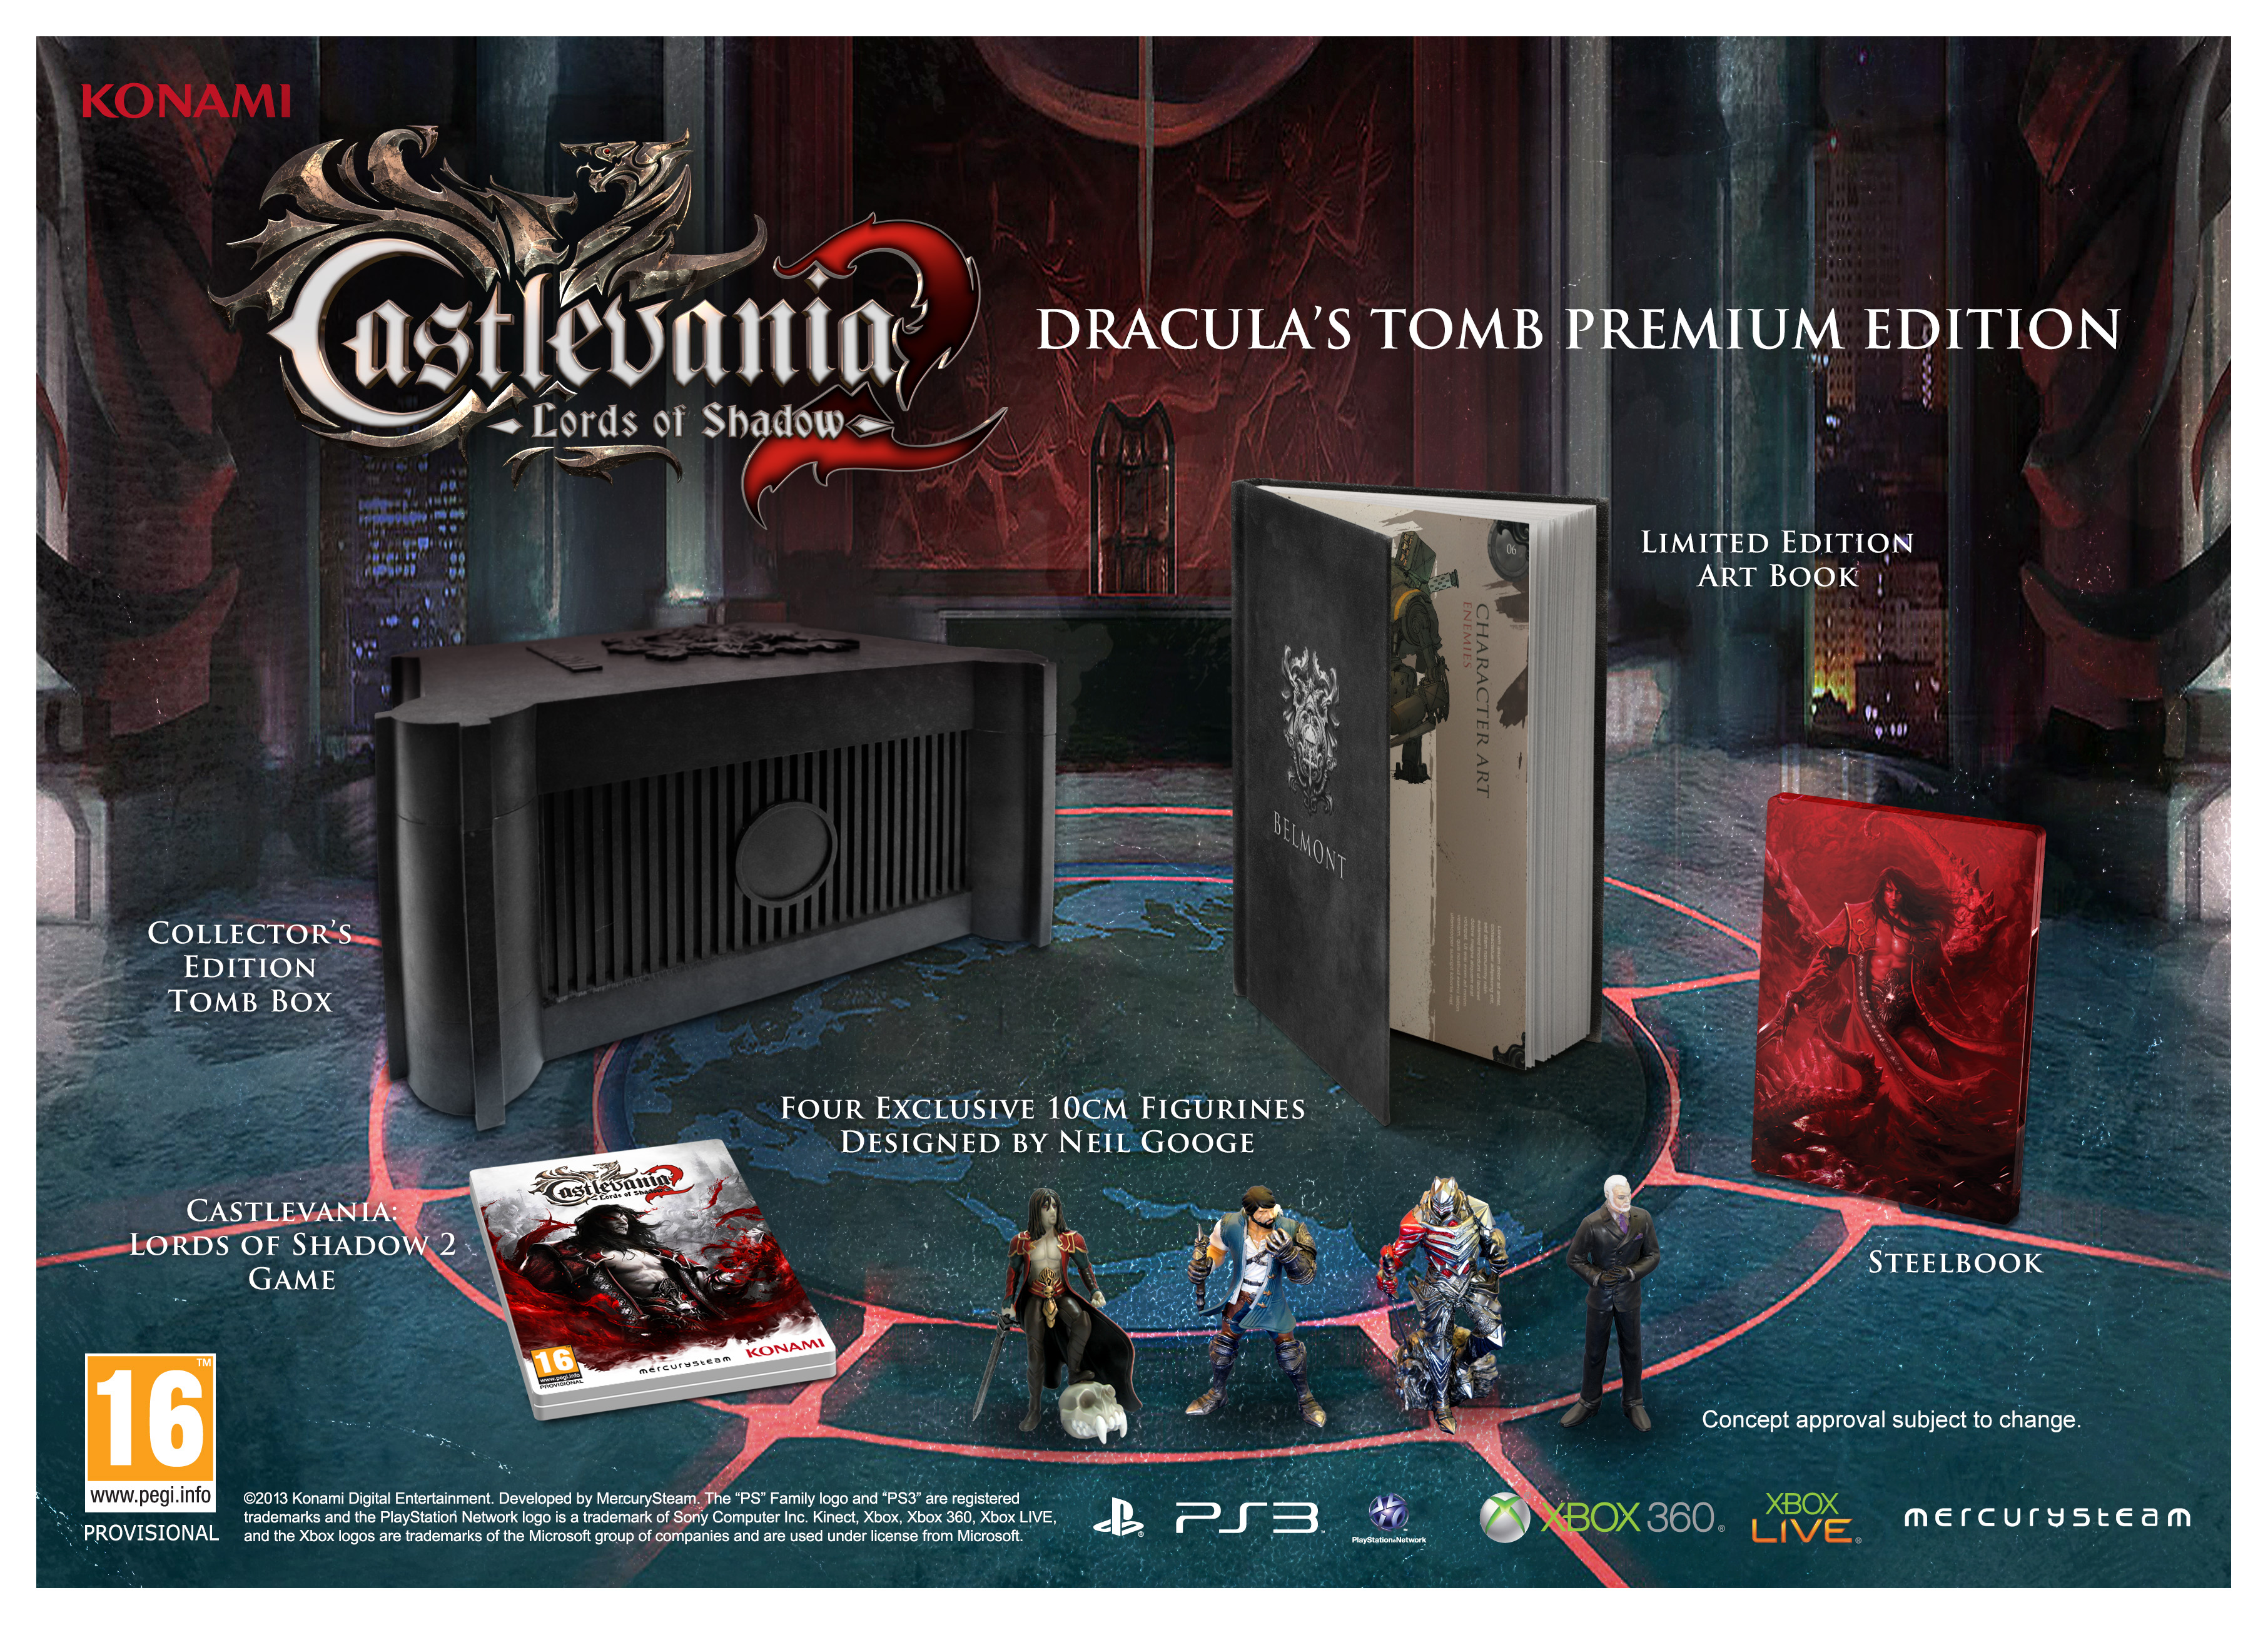 Castlevania-Lords-of-Shadows-2-Dracula%E2%80%99s-Tomb-Premium-Edition.jpg